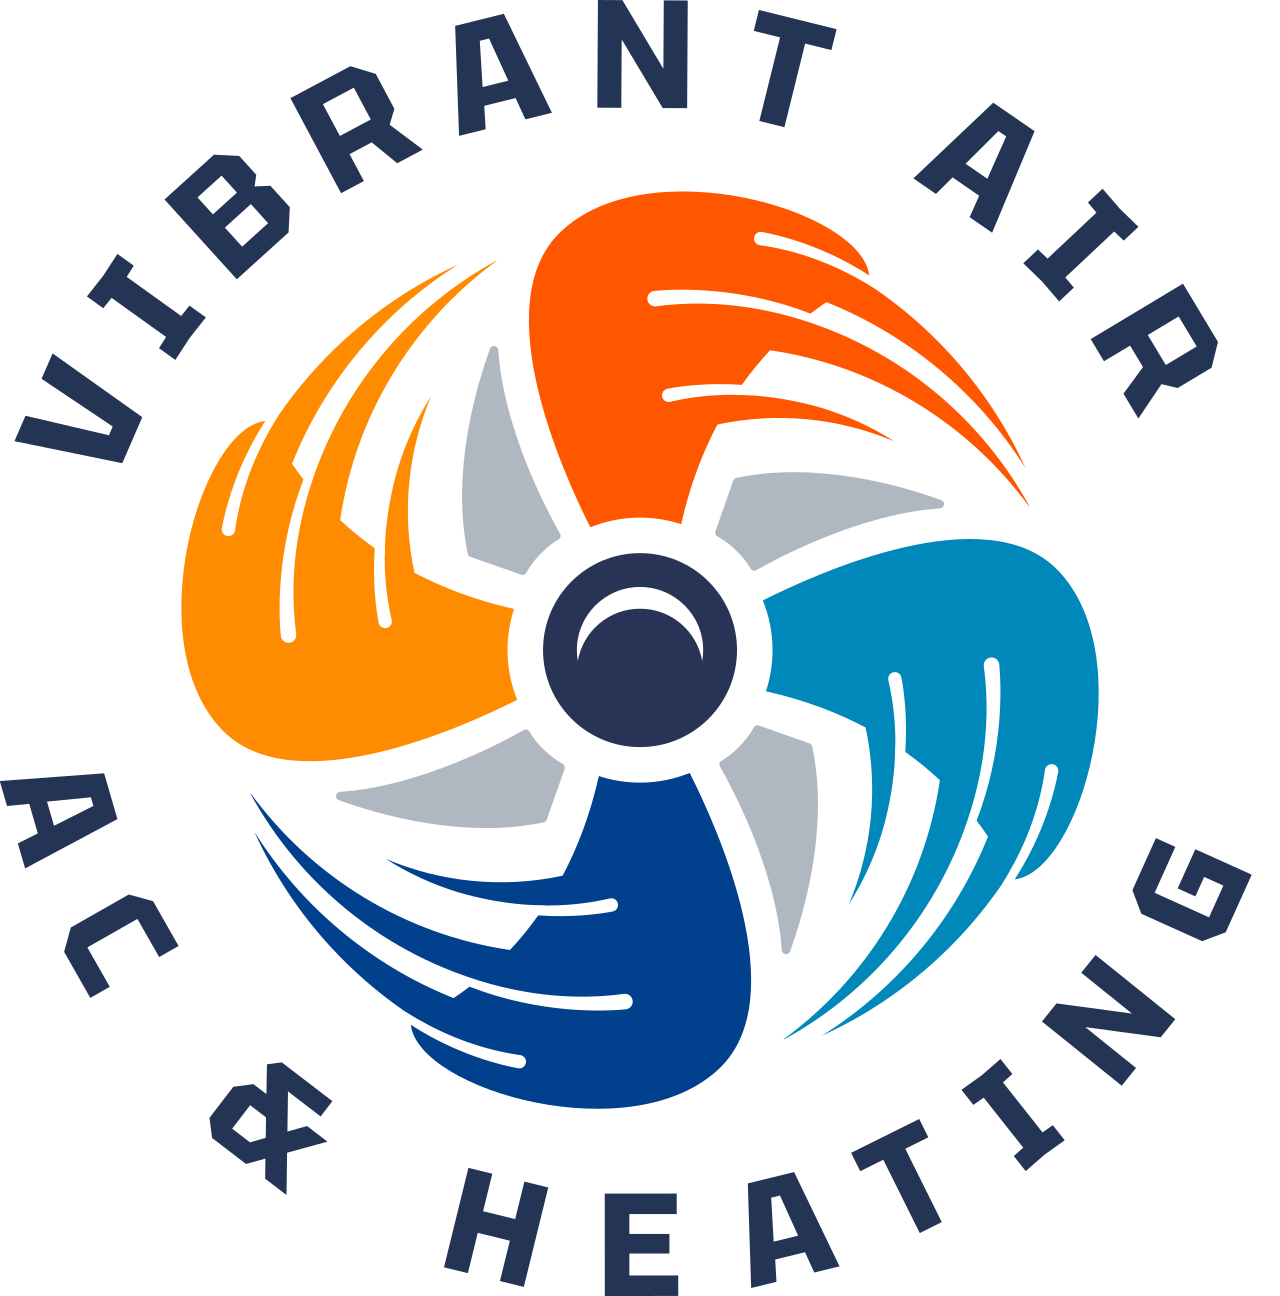 VIBRANT AIR 's logo